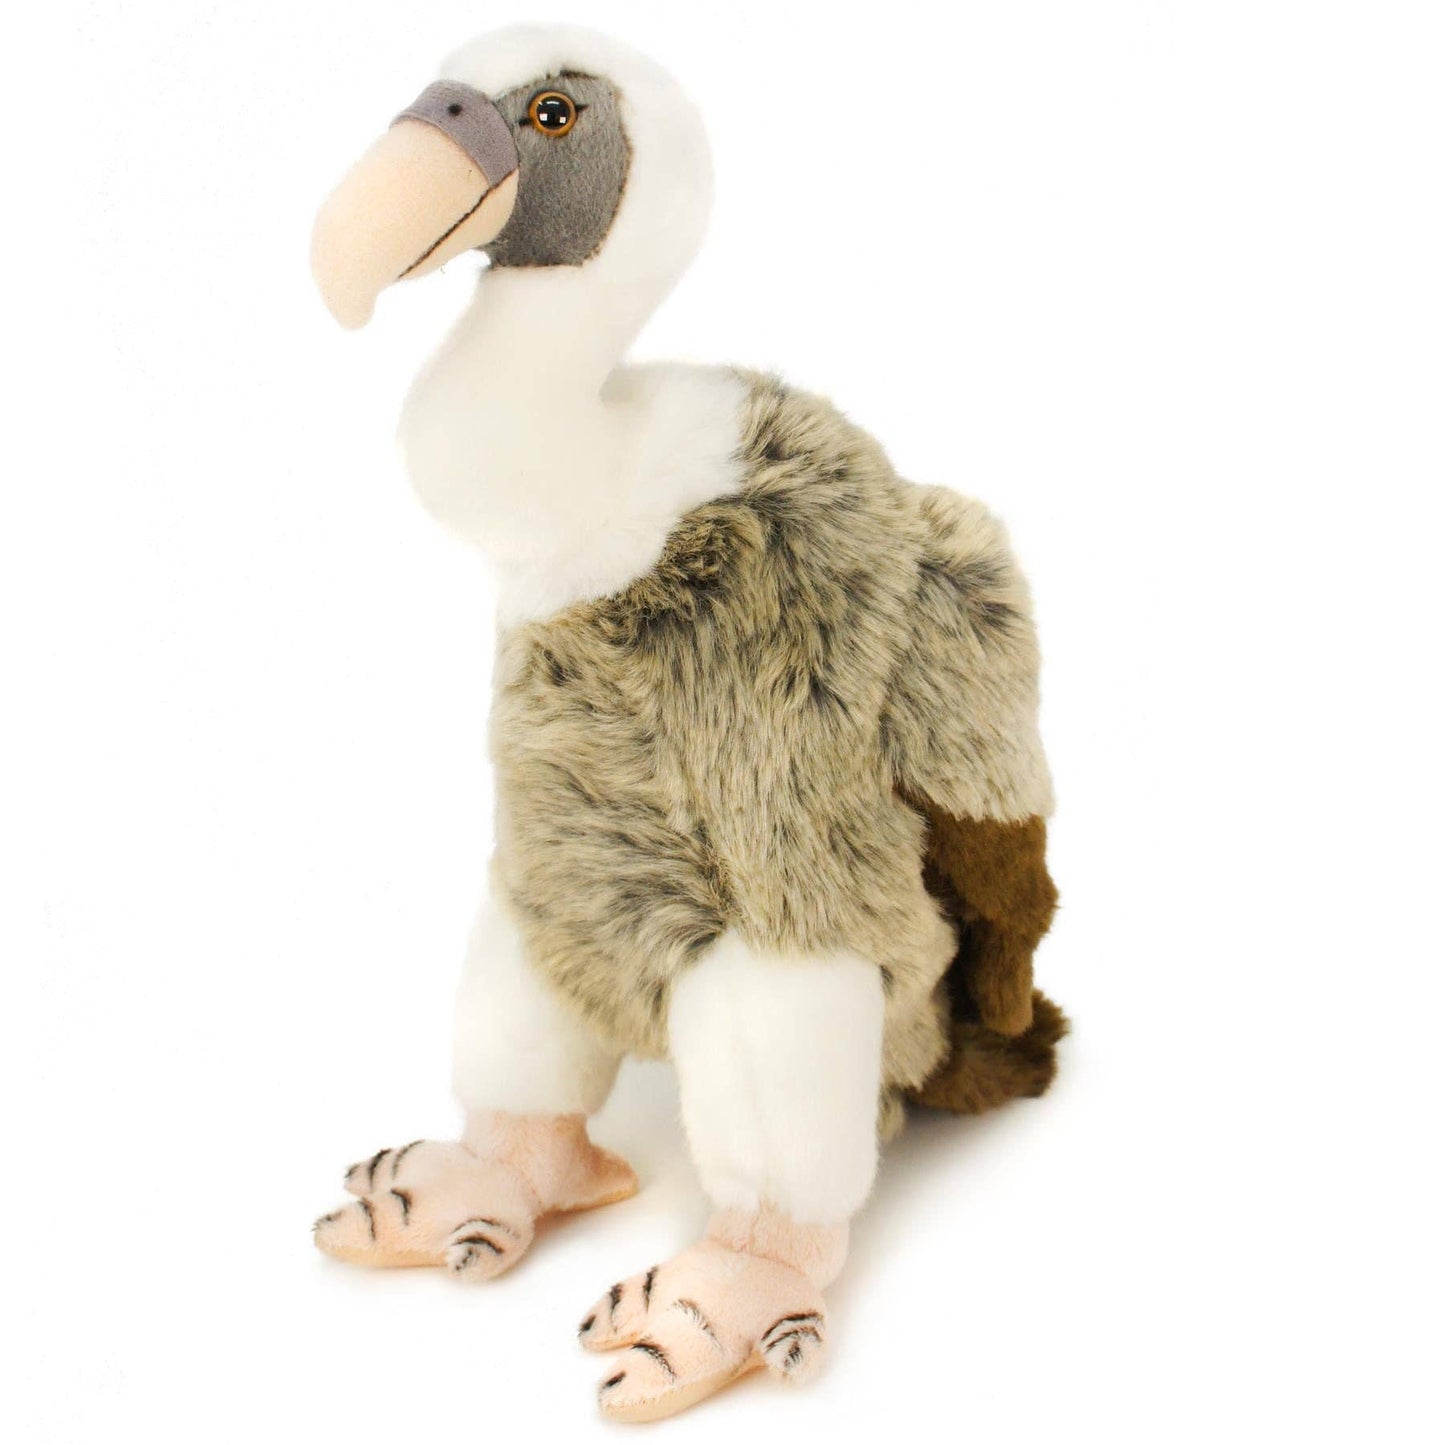 The Vulture | 12 Inch Stuffed Animal Plush